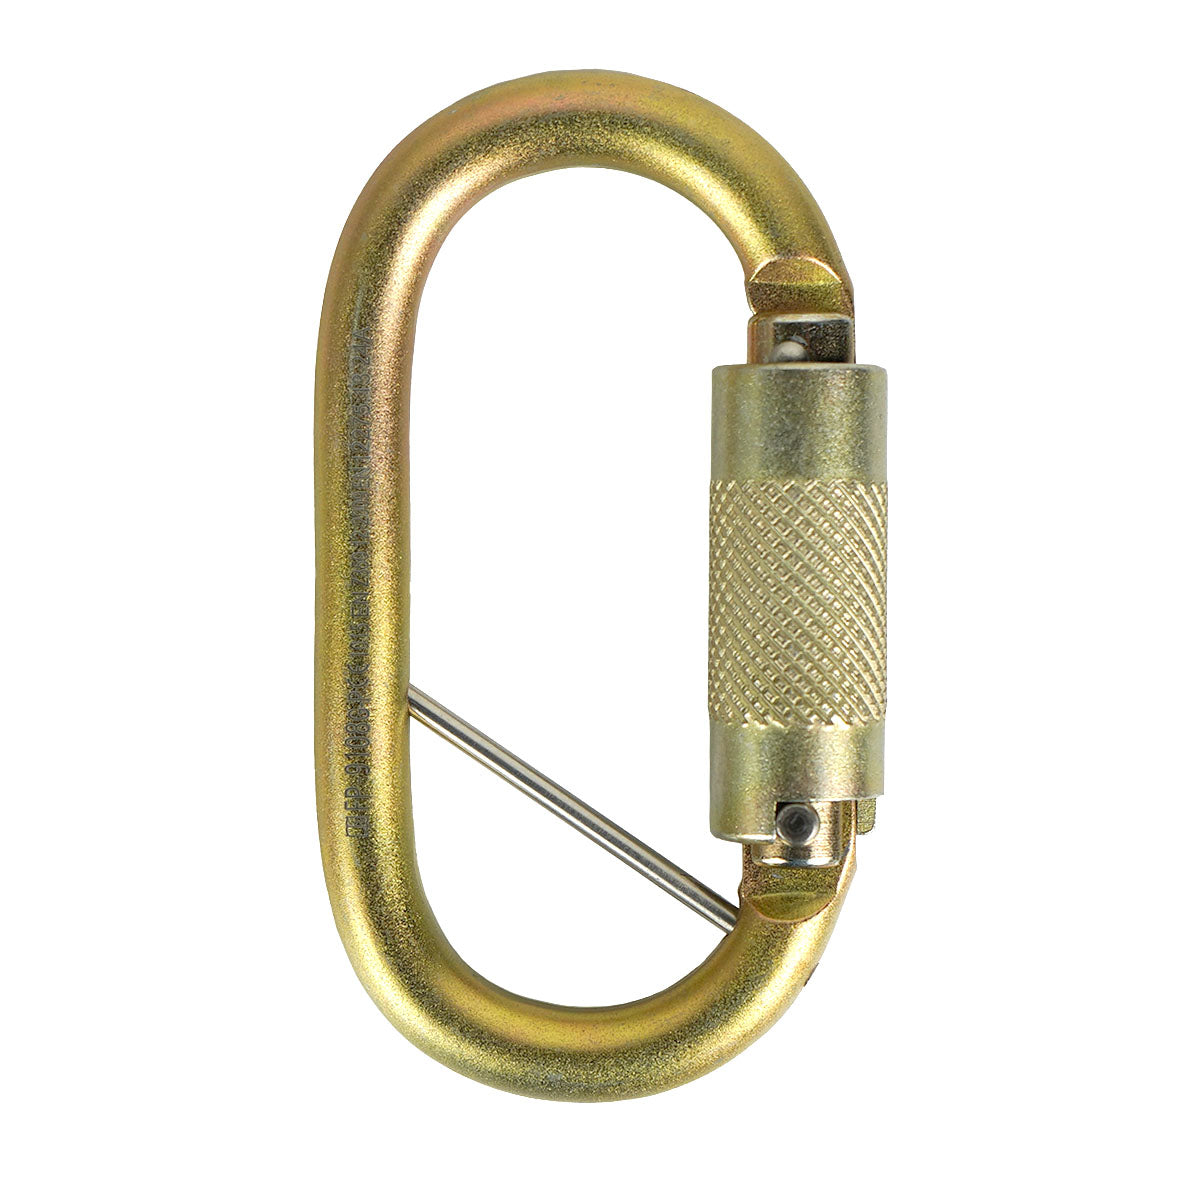 Ovatti Steel - Auto Lock Carabiner - With Captive Eye Pin - Gold